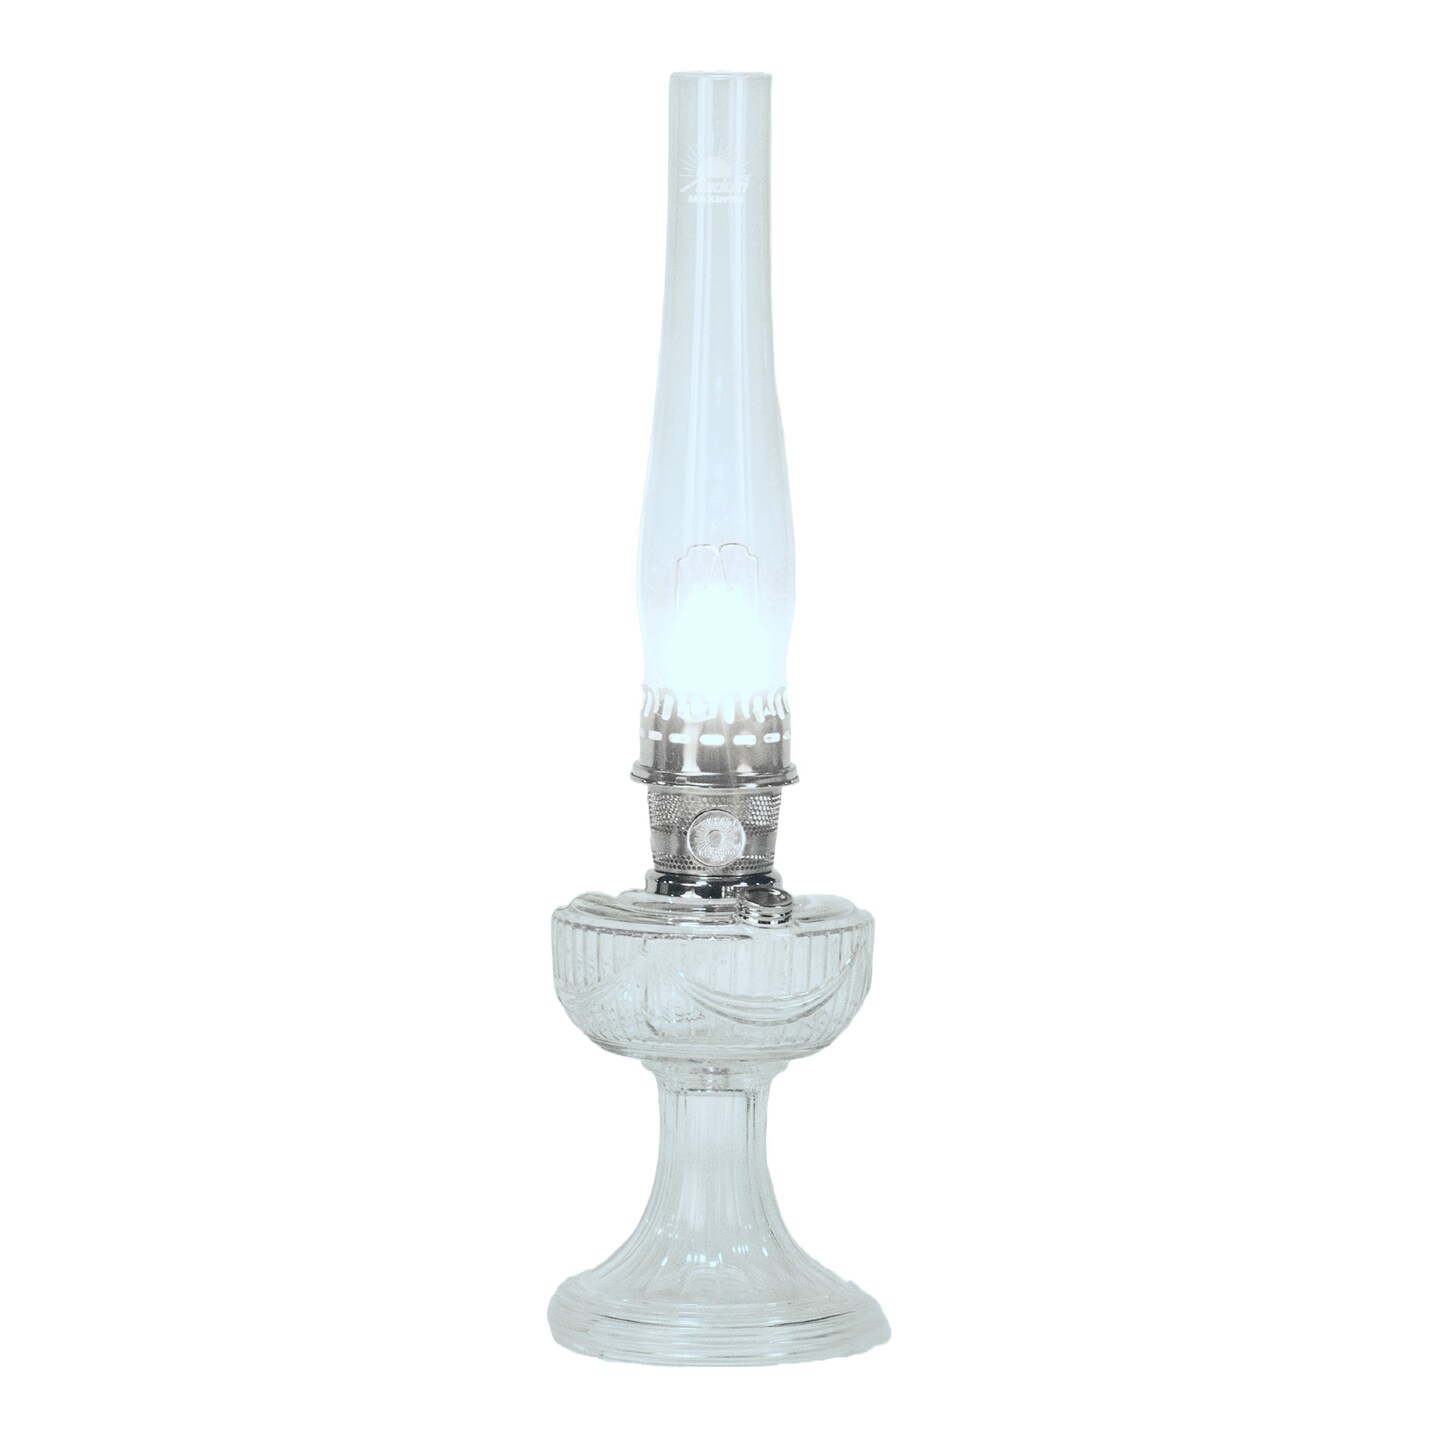 Aladdin Lincoln Drape Oil Lamp - Traditional Classic Indoor Oil or Kerosene Fuel Lamp, Bright White Light, Glass with Nickel Trim